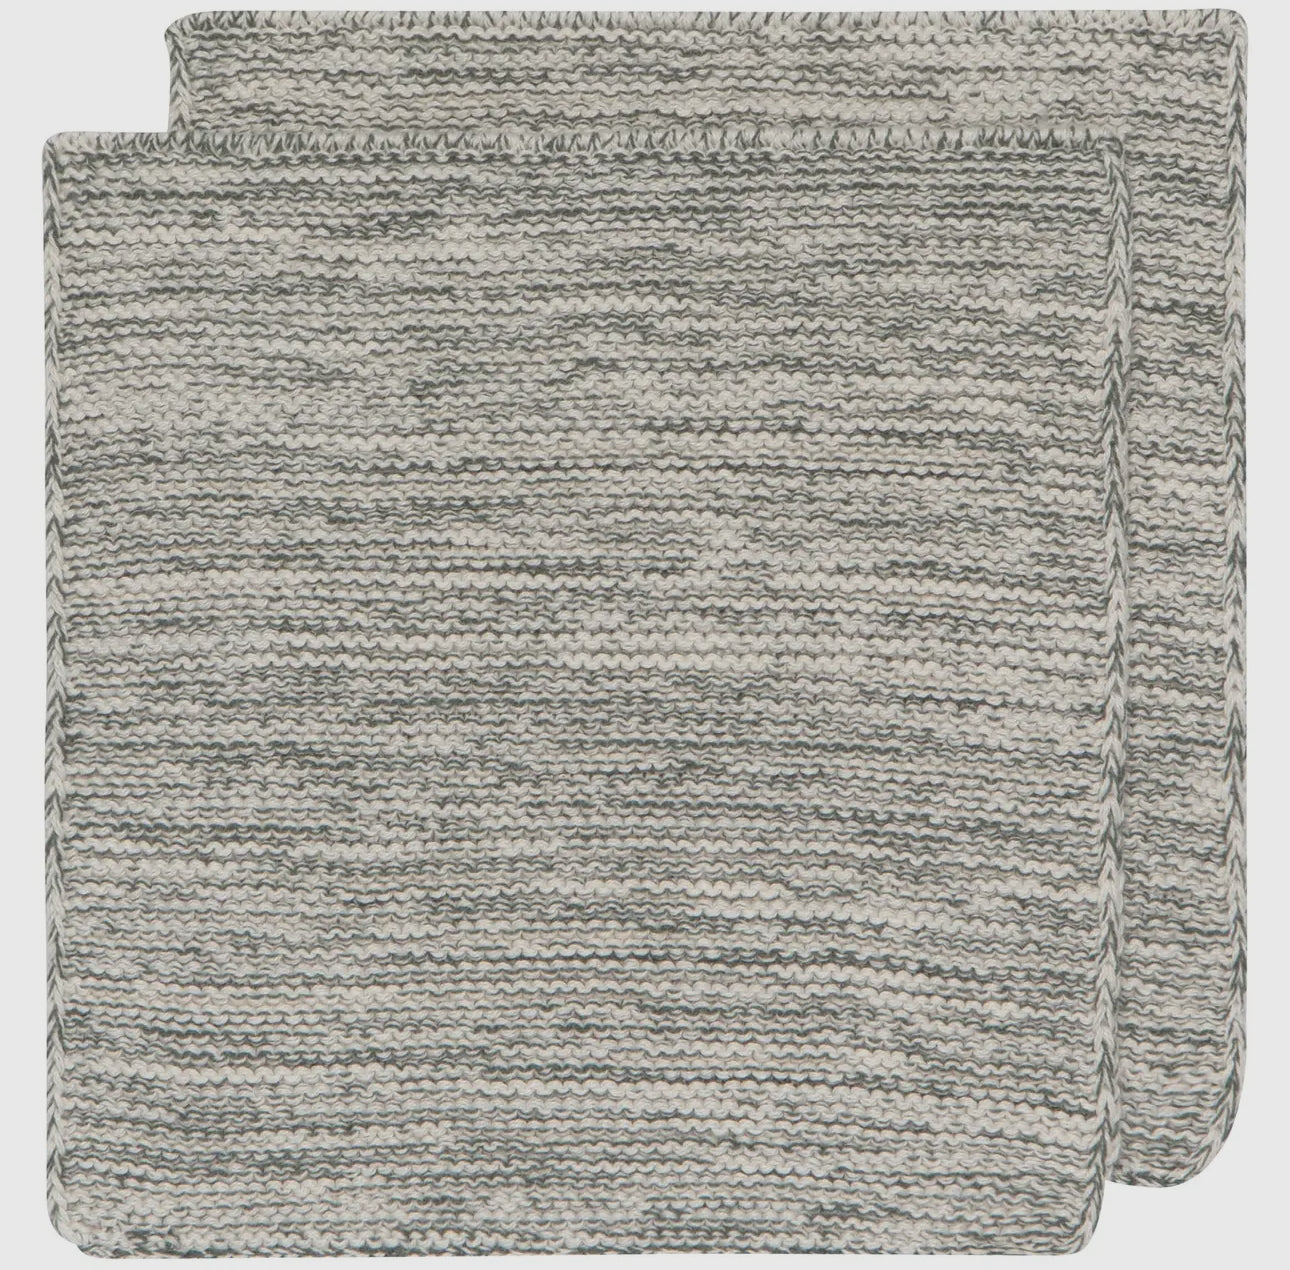 Knit dishcloths set of 2